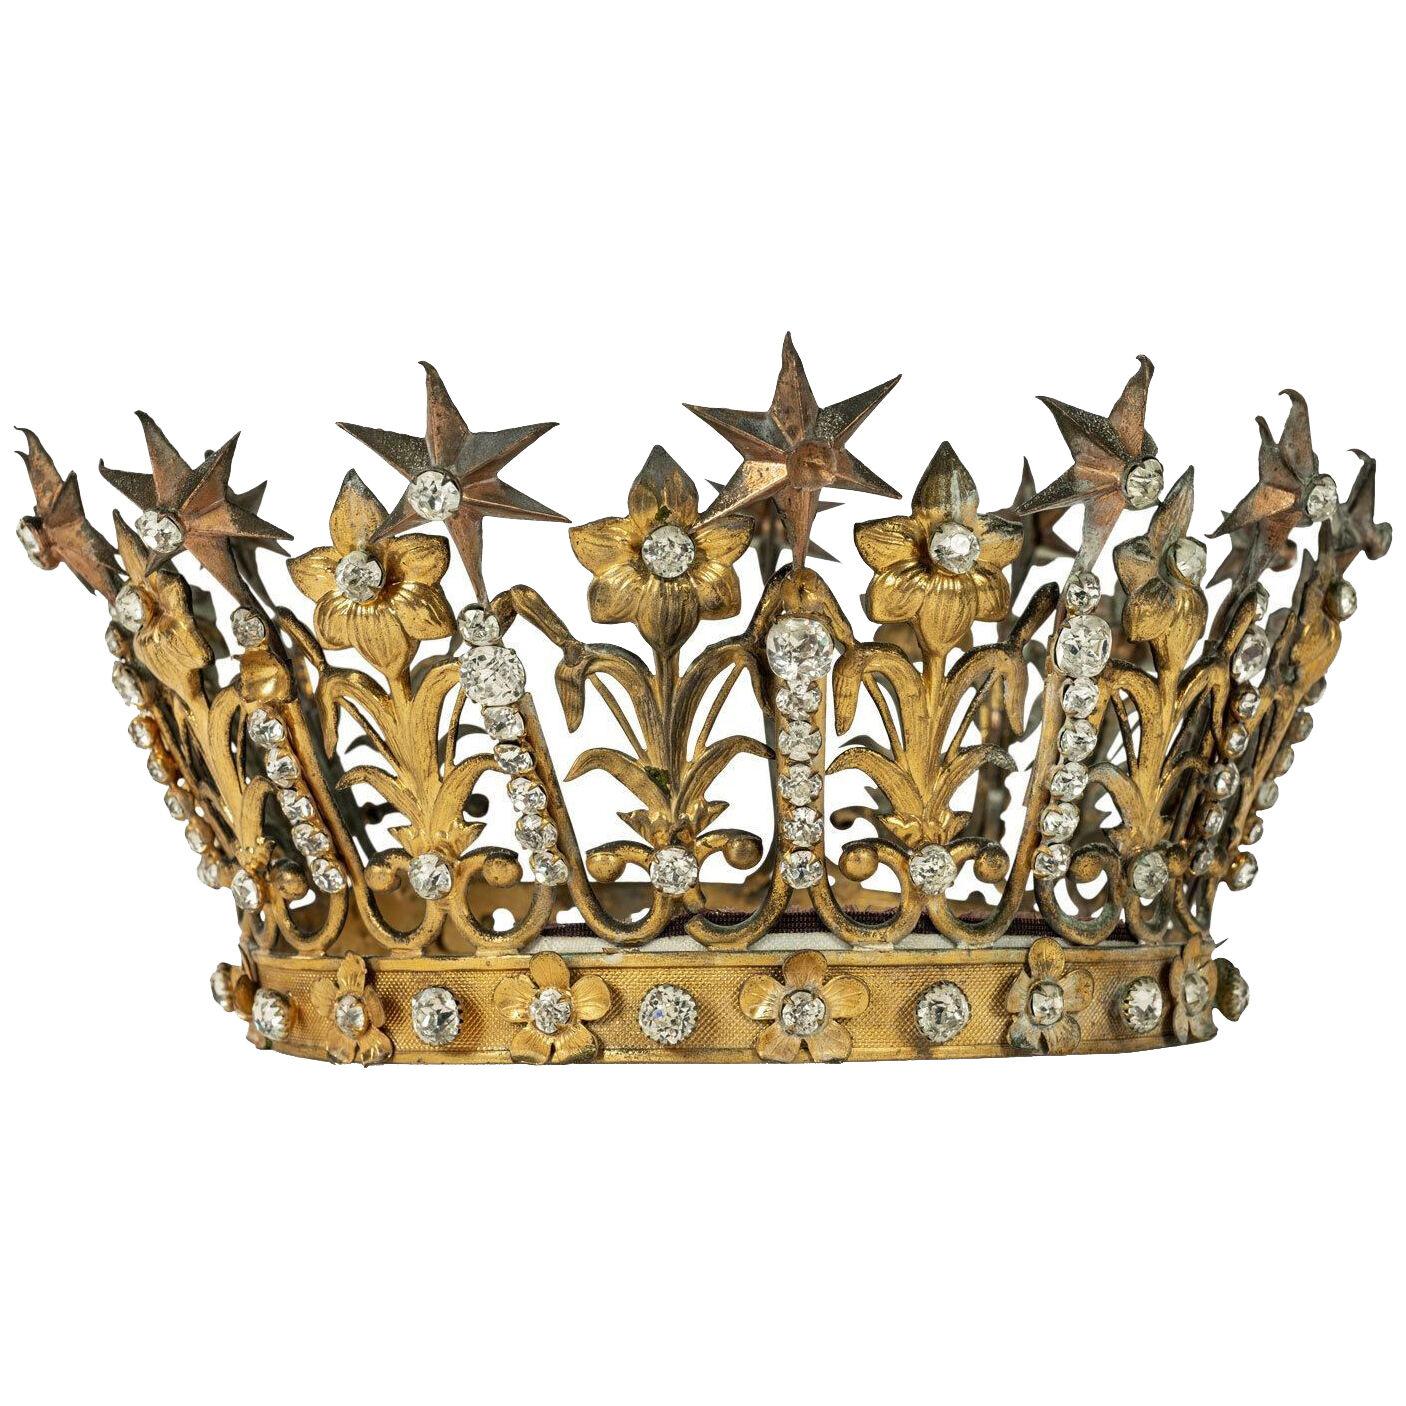 Antique French Gilt-Tole Repousse Crown